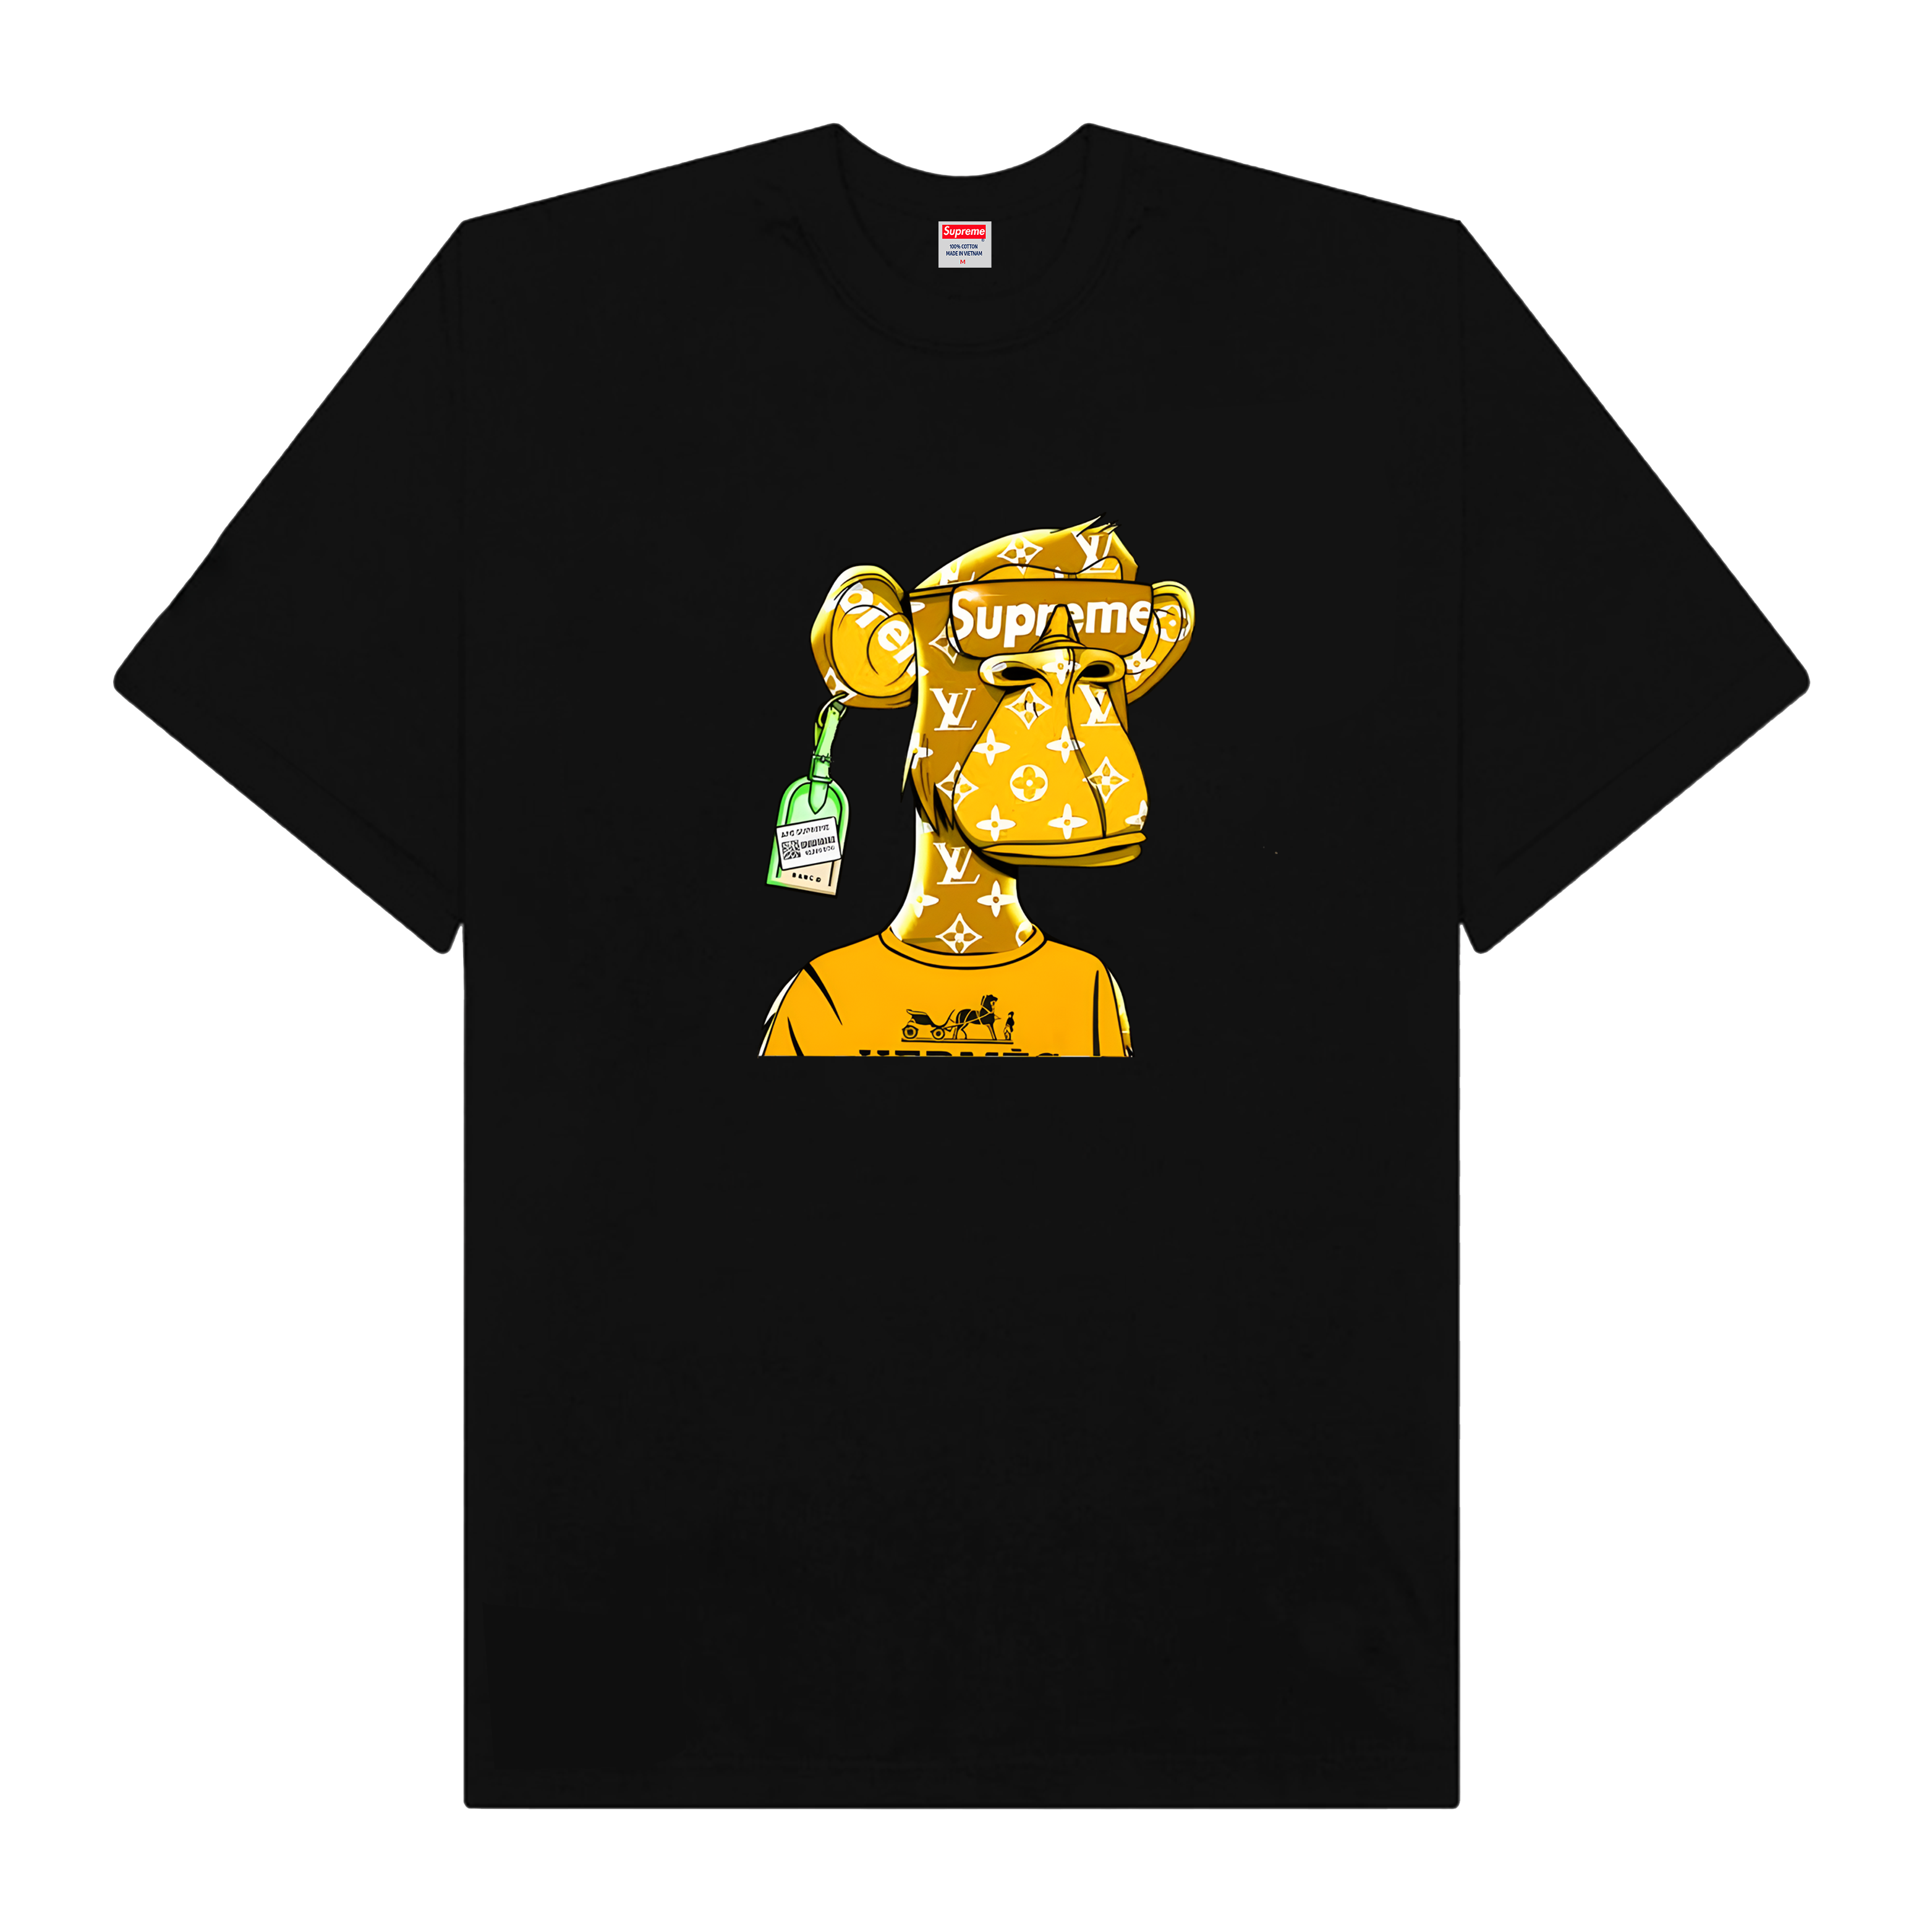 Gold Supreme Bape T-Shirt